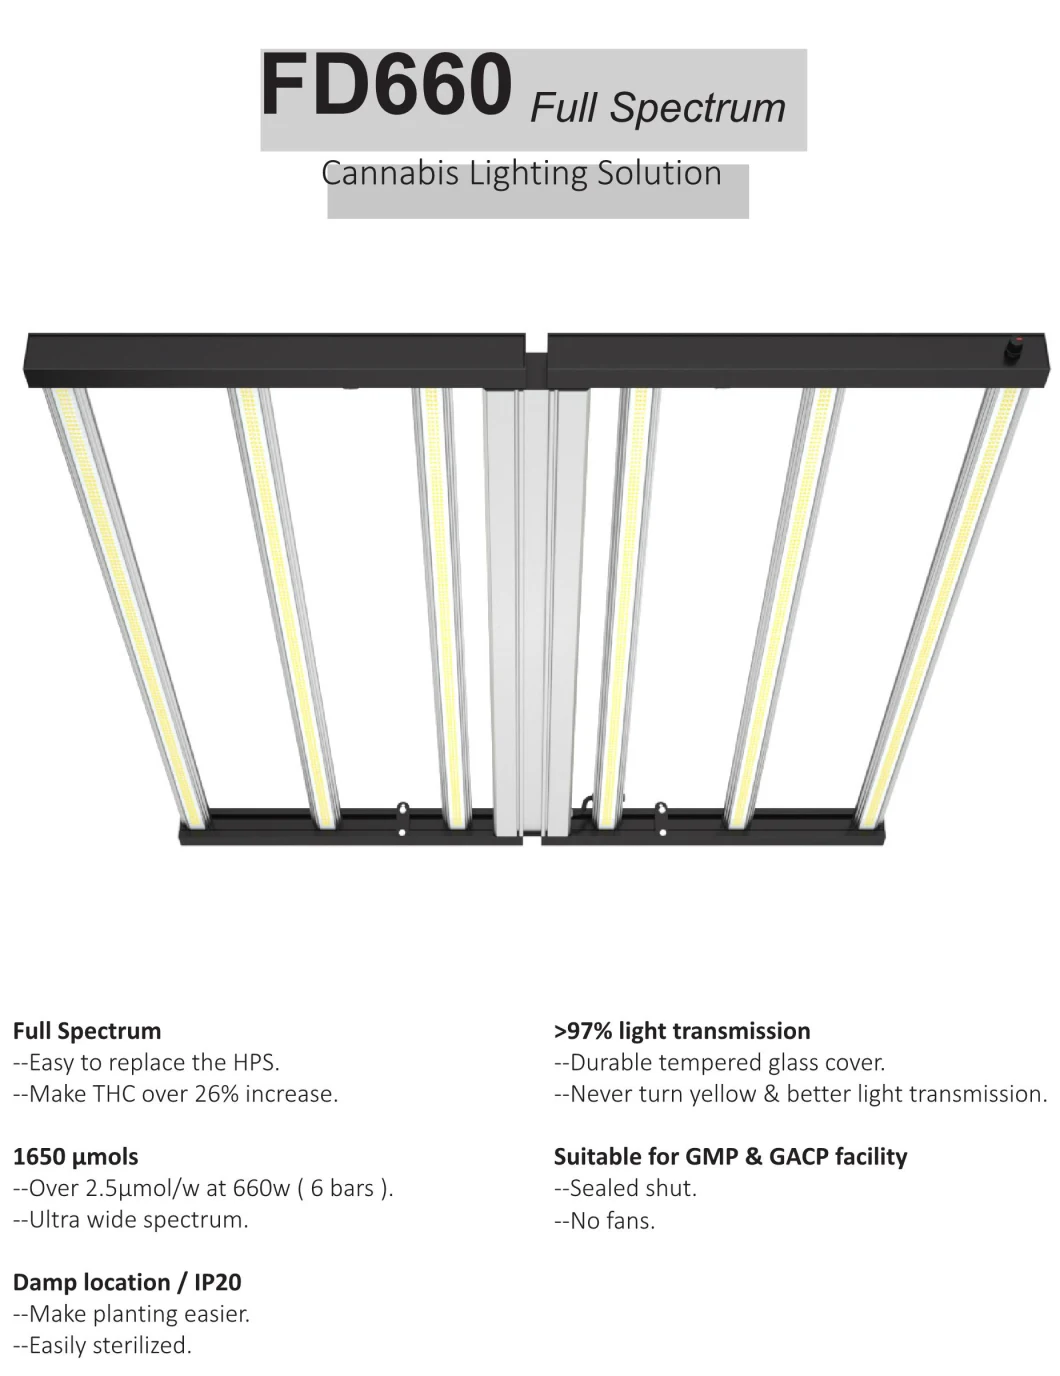 Samsung Chip LED Grow Light 660W 6 Bars Hydroponics Full Spectrum Fluence Spydr Commercial Planting Fixture